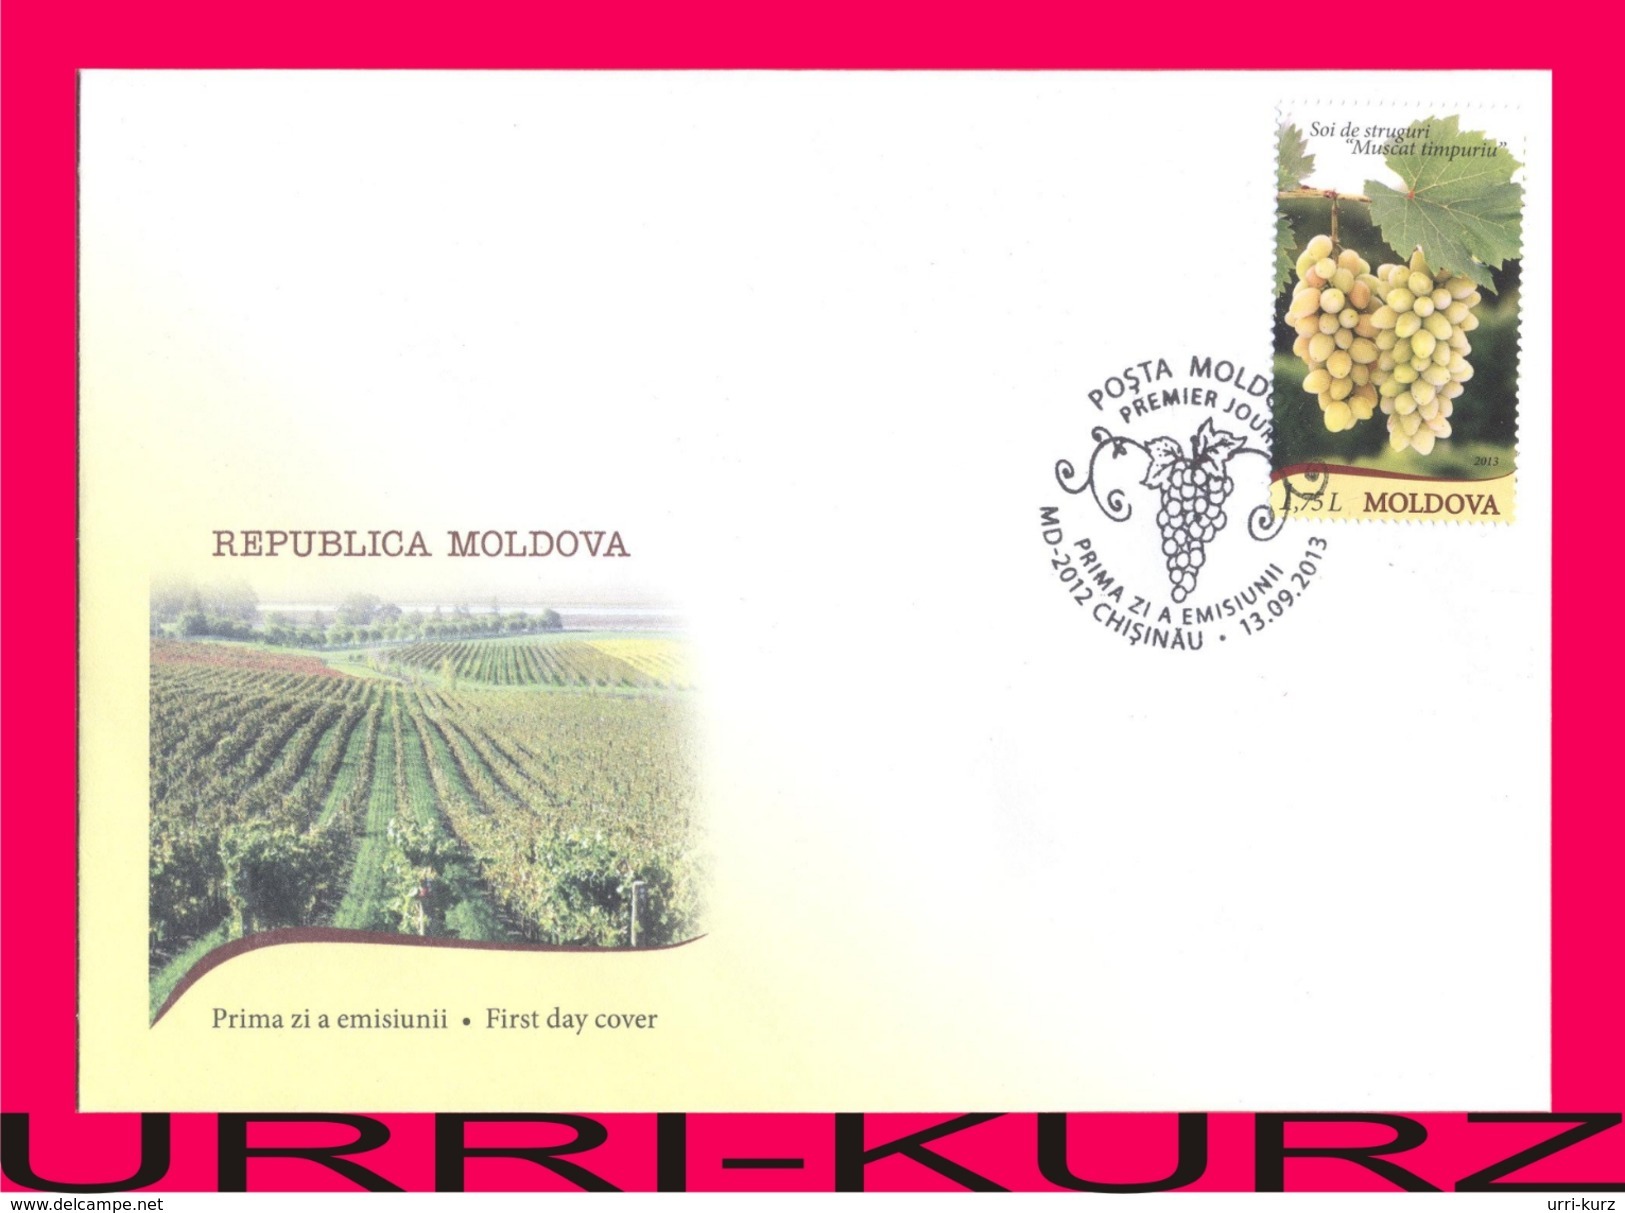 MOLDOVA 2013 Nature Flora Fruits Grapes Fruit Grape Muscat Vineyards Winemaking Mi849 Sc804 FDC - Landbouw